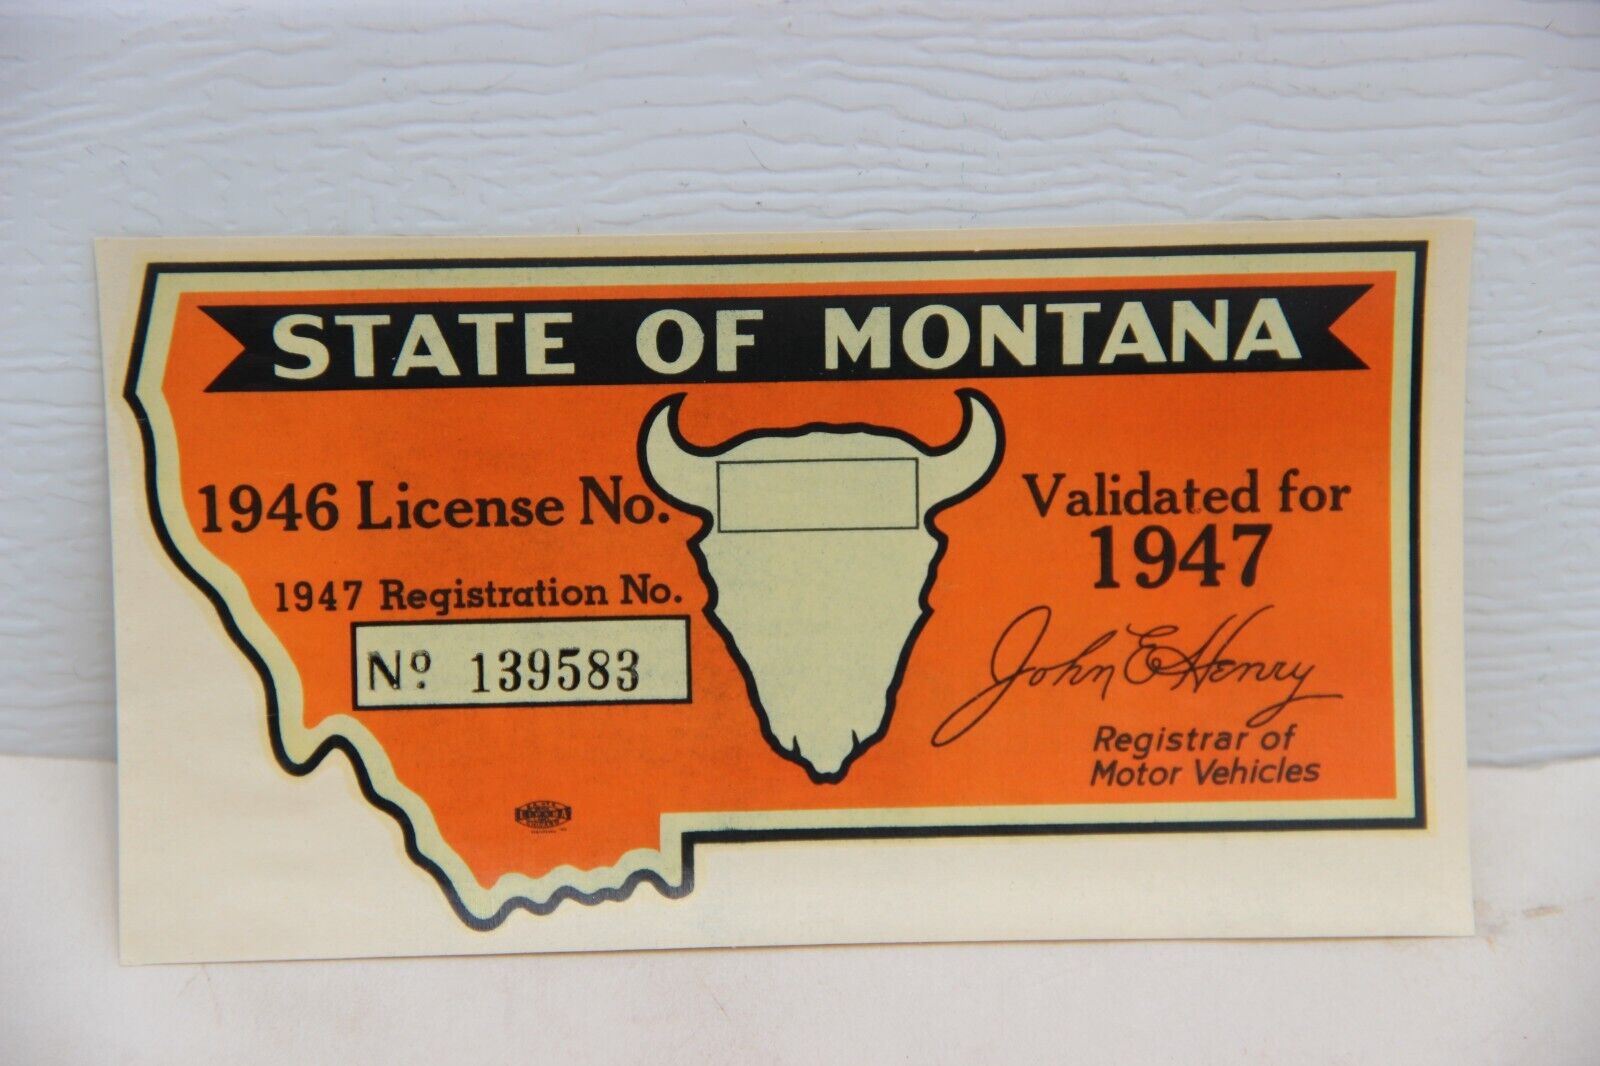 1947 Montana License Plate Window Sticker - original in new condition